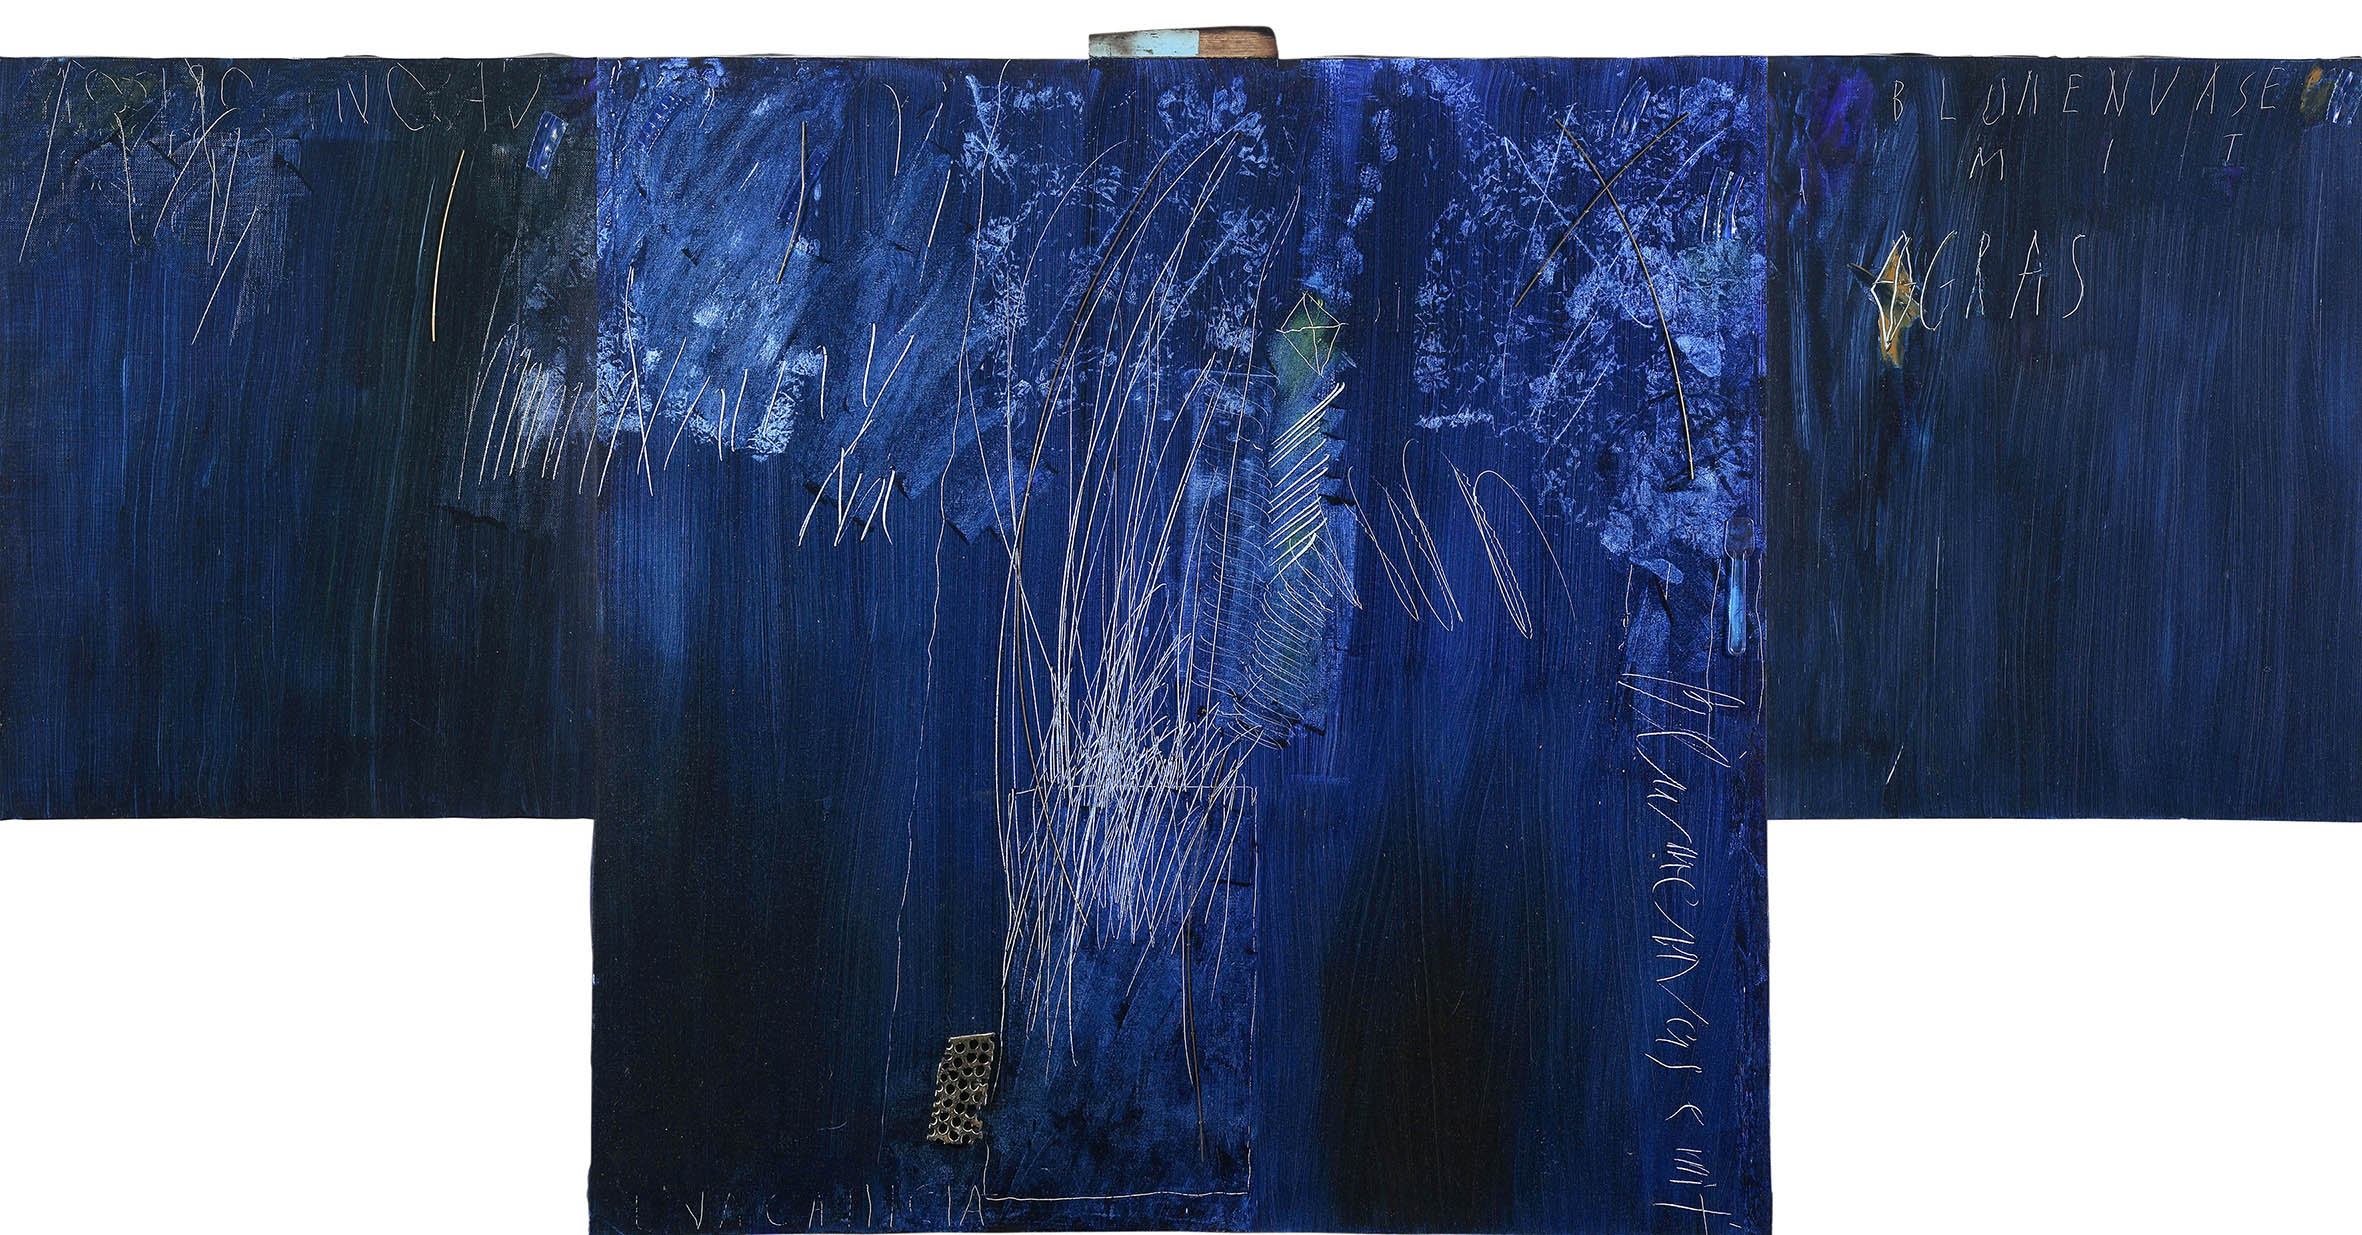 Big Blue Shirt - Blumenvase mit Gras, Flower vase with grass, 2007 - oil and collage on canvas, triptych, cm 80x160